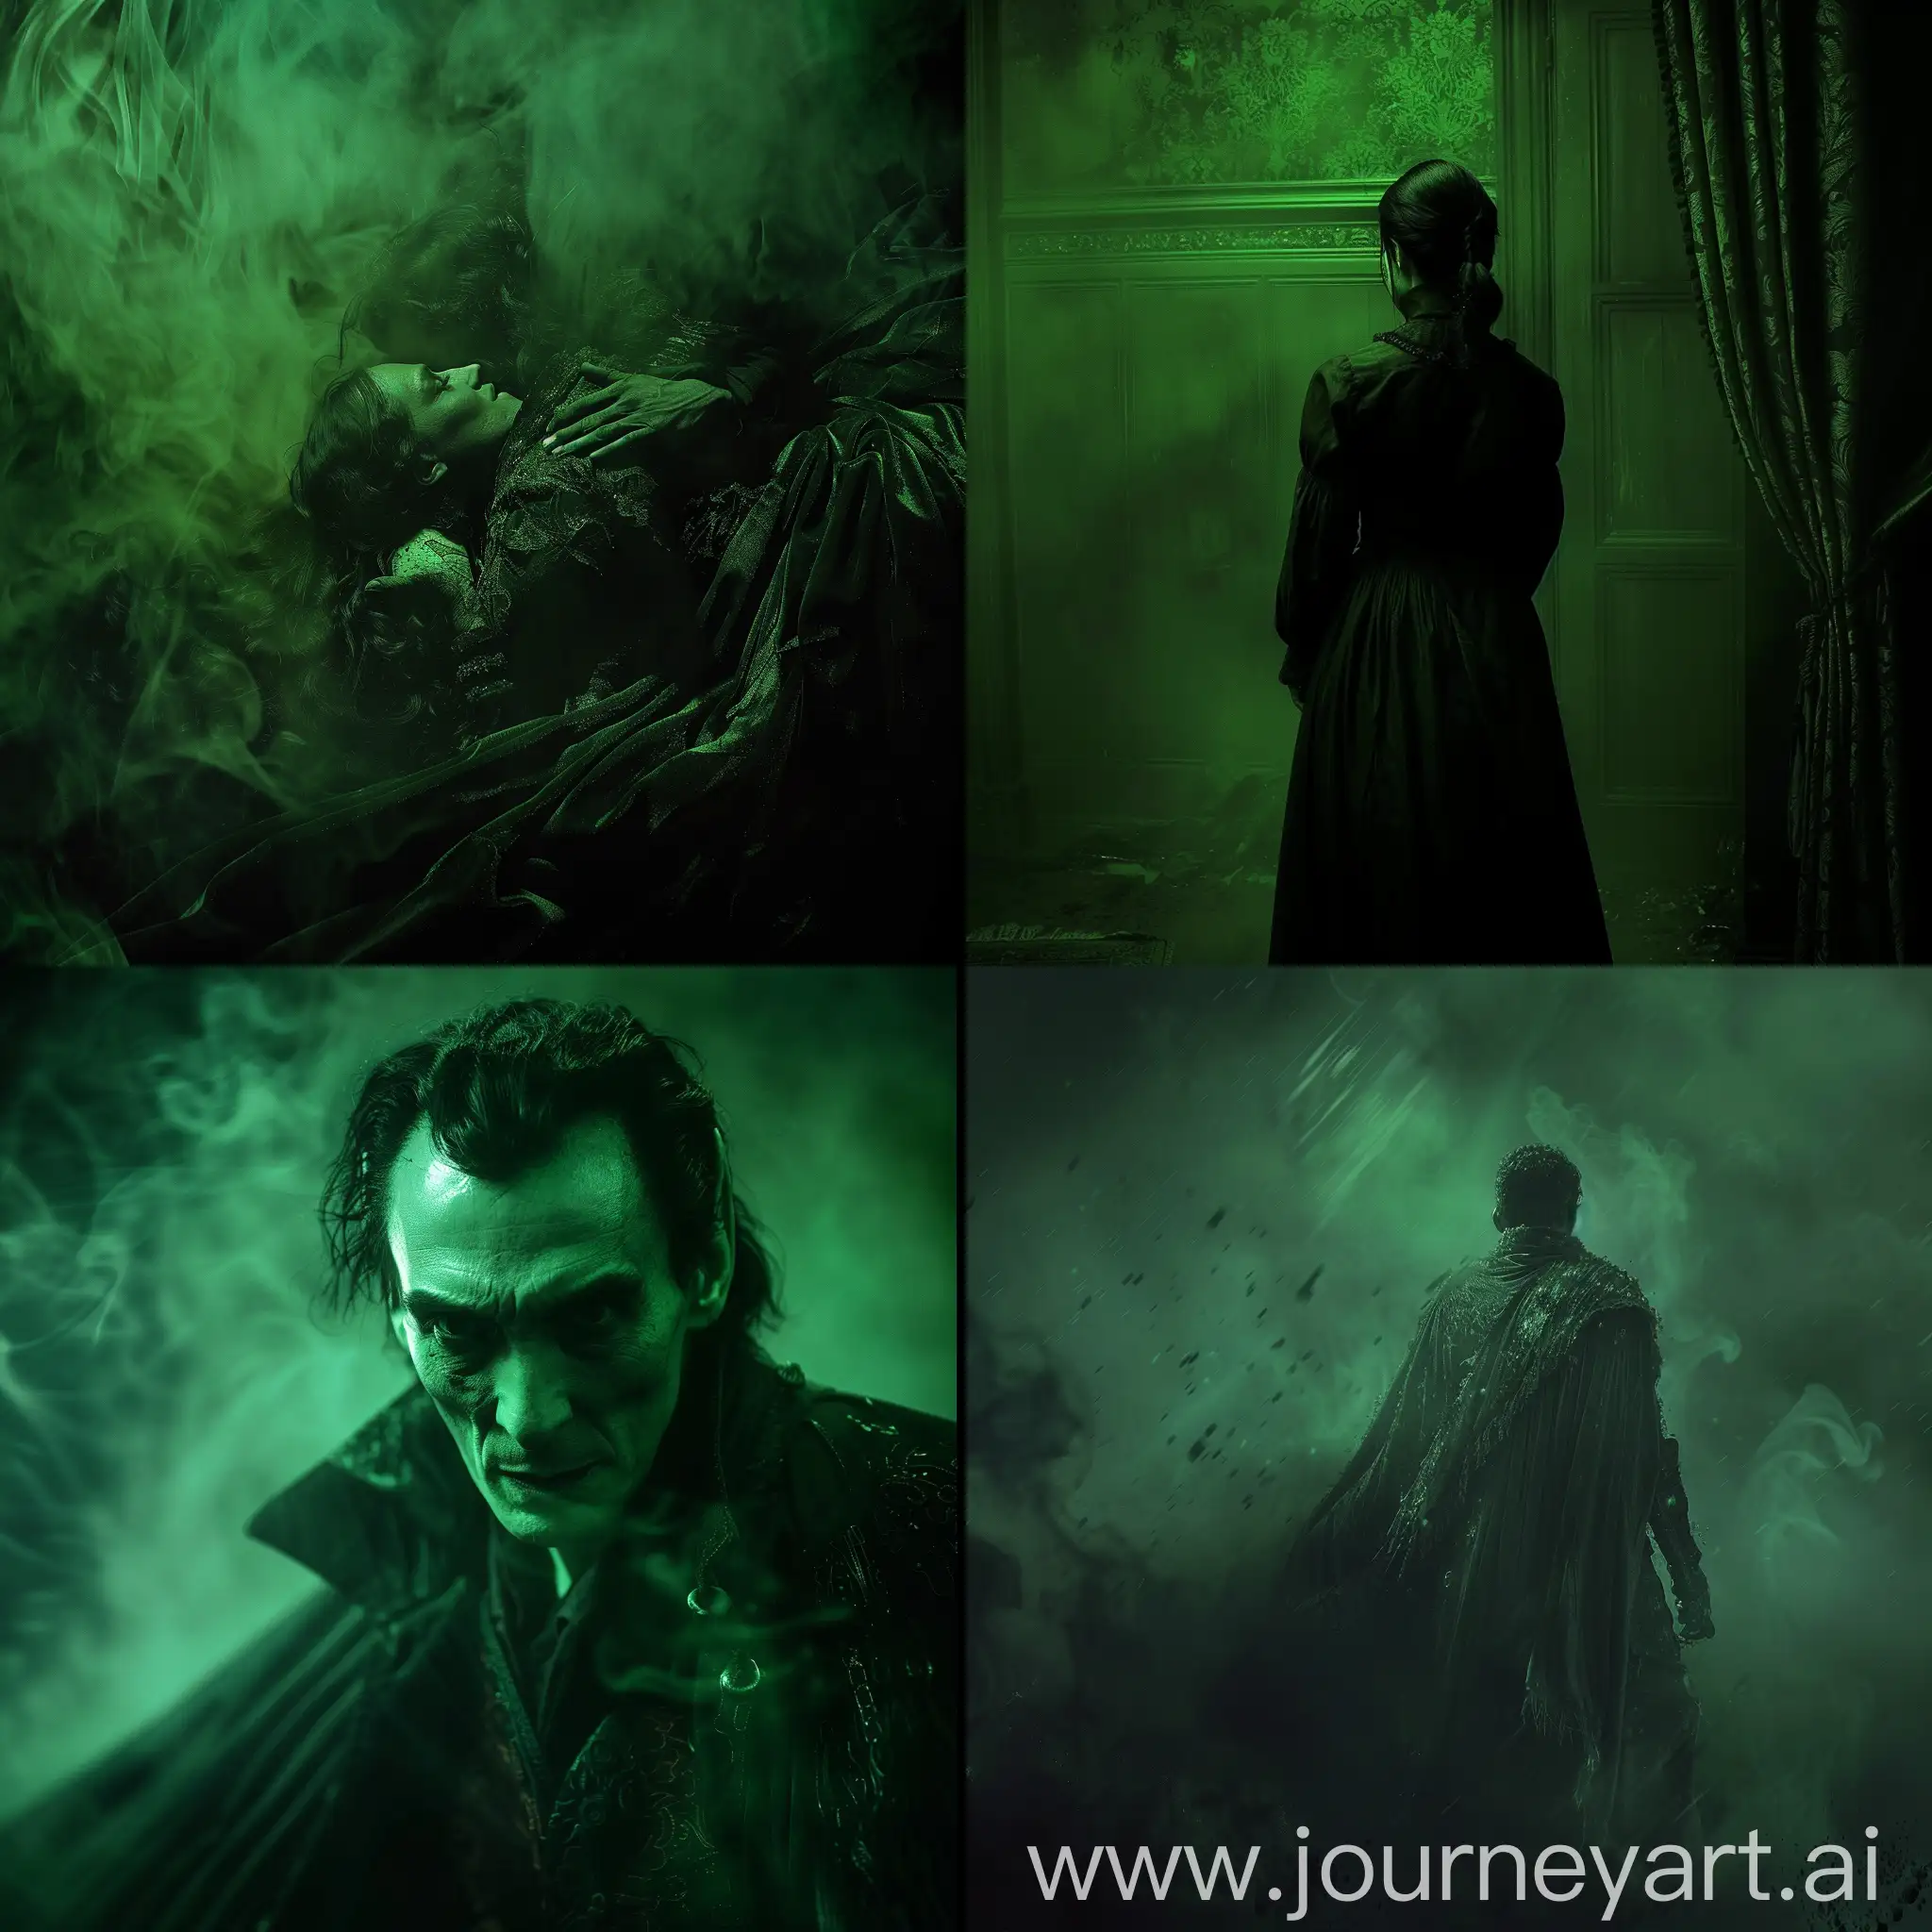 dark, green, tragedy, vampires, 1:1 aspect ratio, cinematic